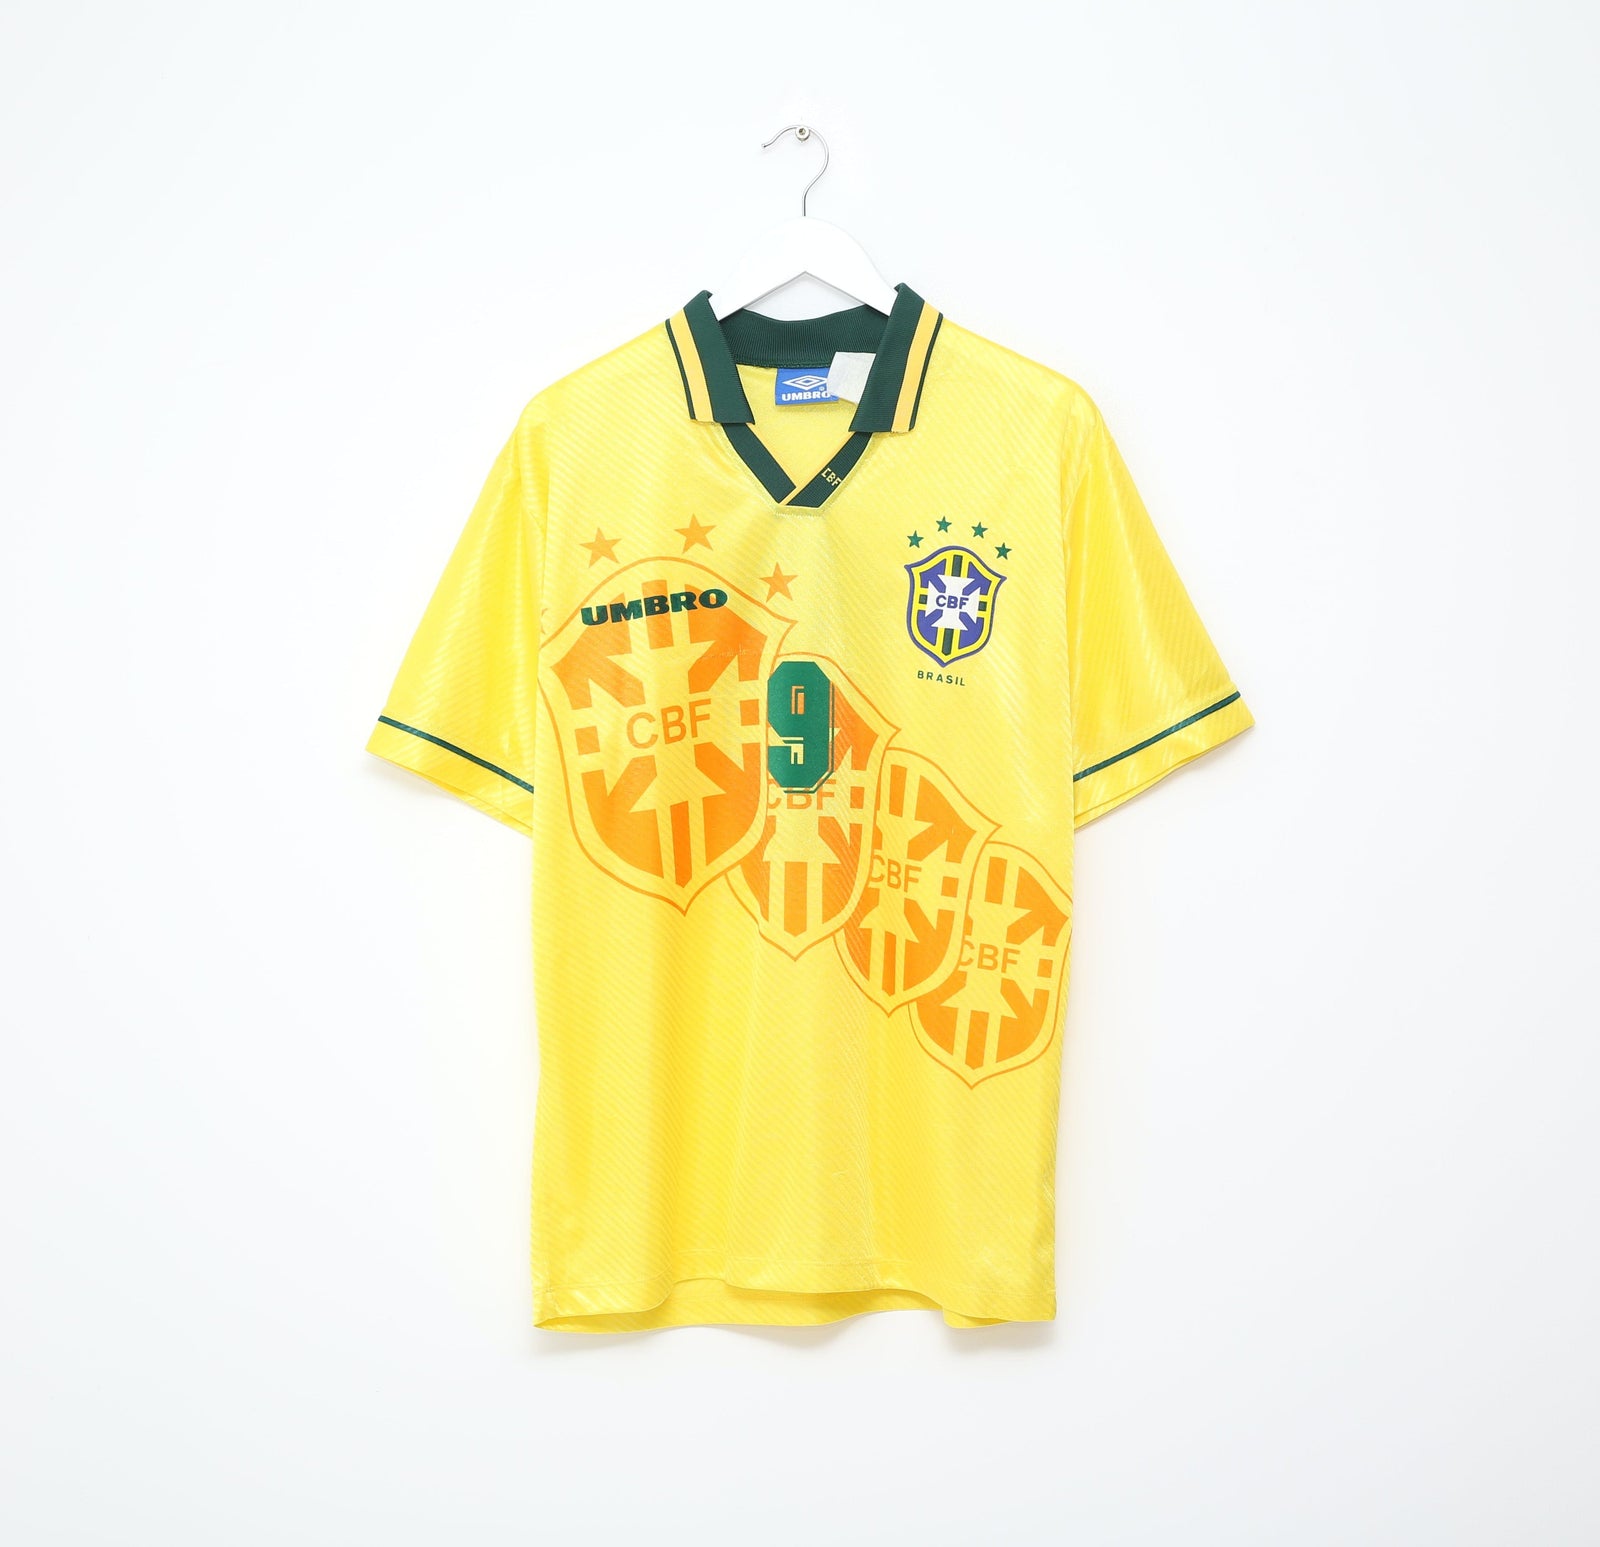 Nike Brazil jersey 9 Ronaldo el fenomene World cup 1998 98 Away men's  S/M/L/XL/XXL football shirt buy & order cheap online shop -   retro, vintage & old football shirts & jersey